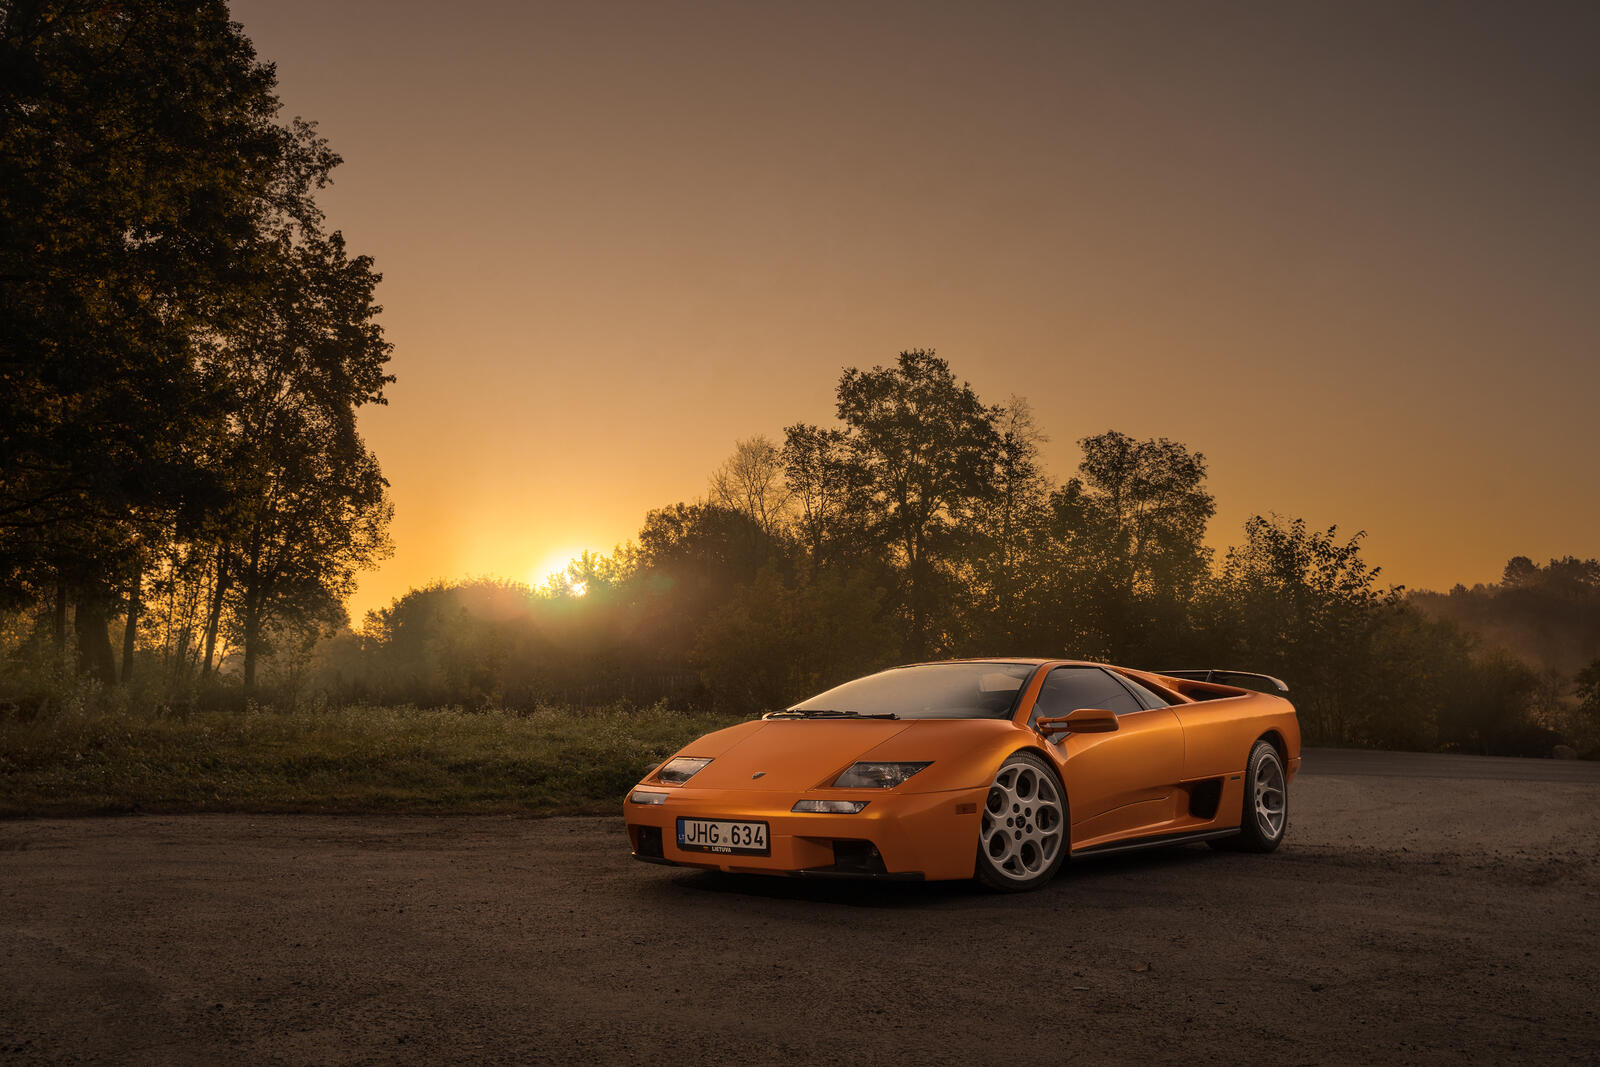 Wallpapers Lamborghini auto behance on the desktop